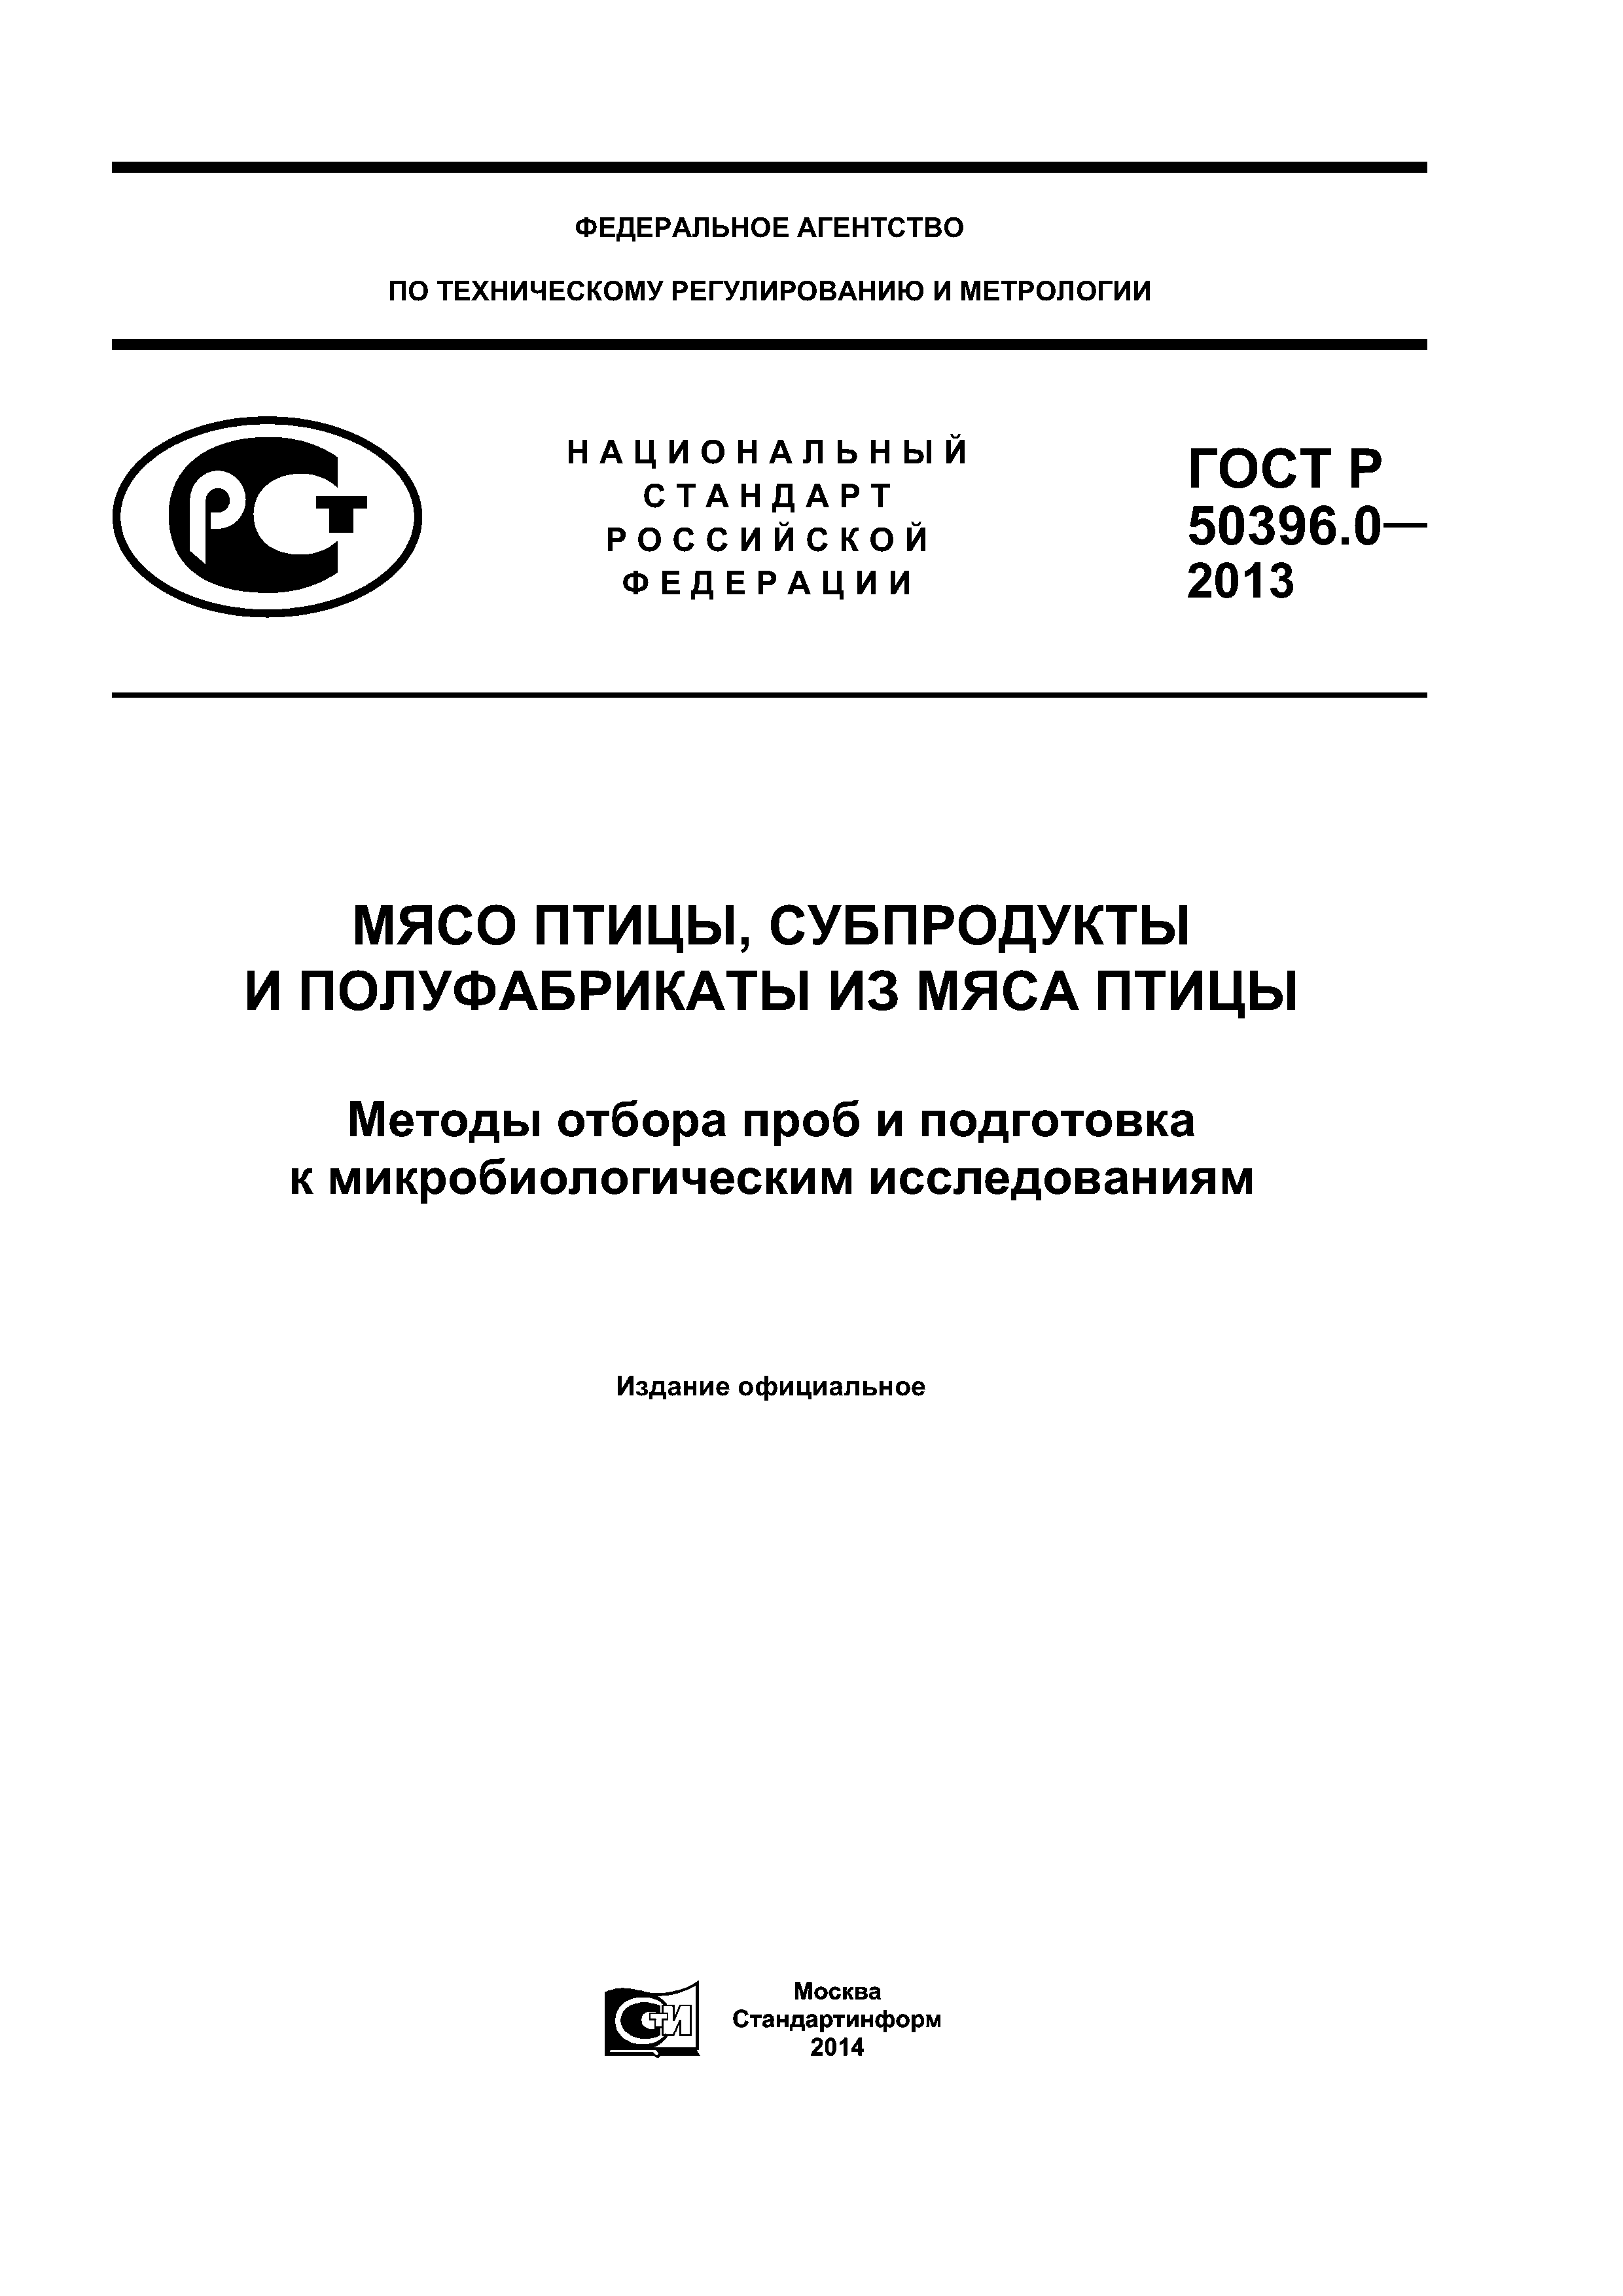 ГОСТ Р 50396.0-2013